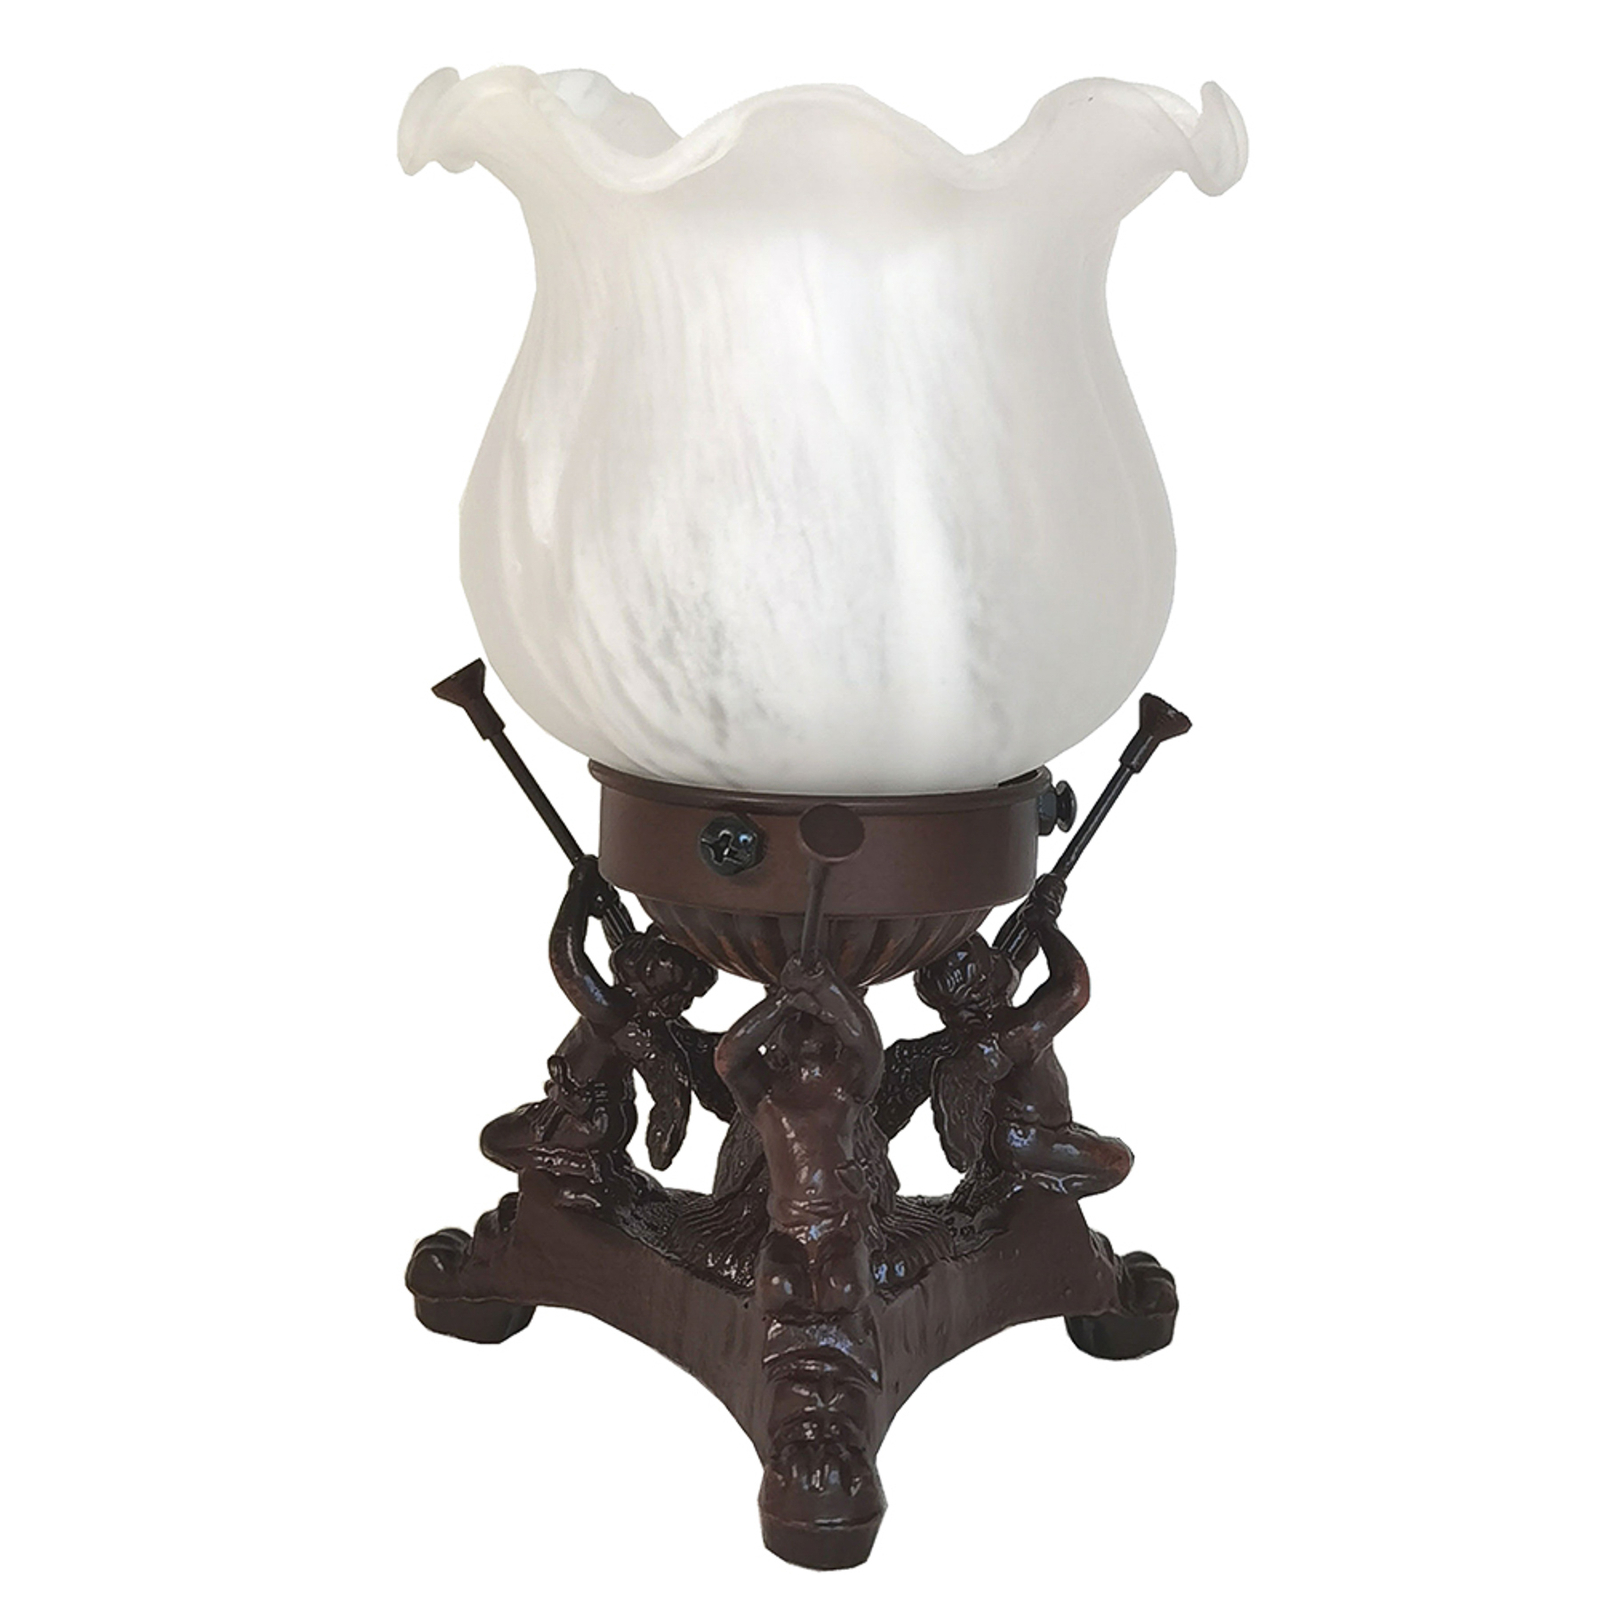 5LL-6101 Tiffany-style table lamp